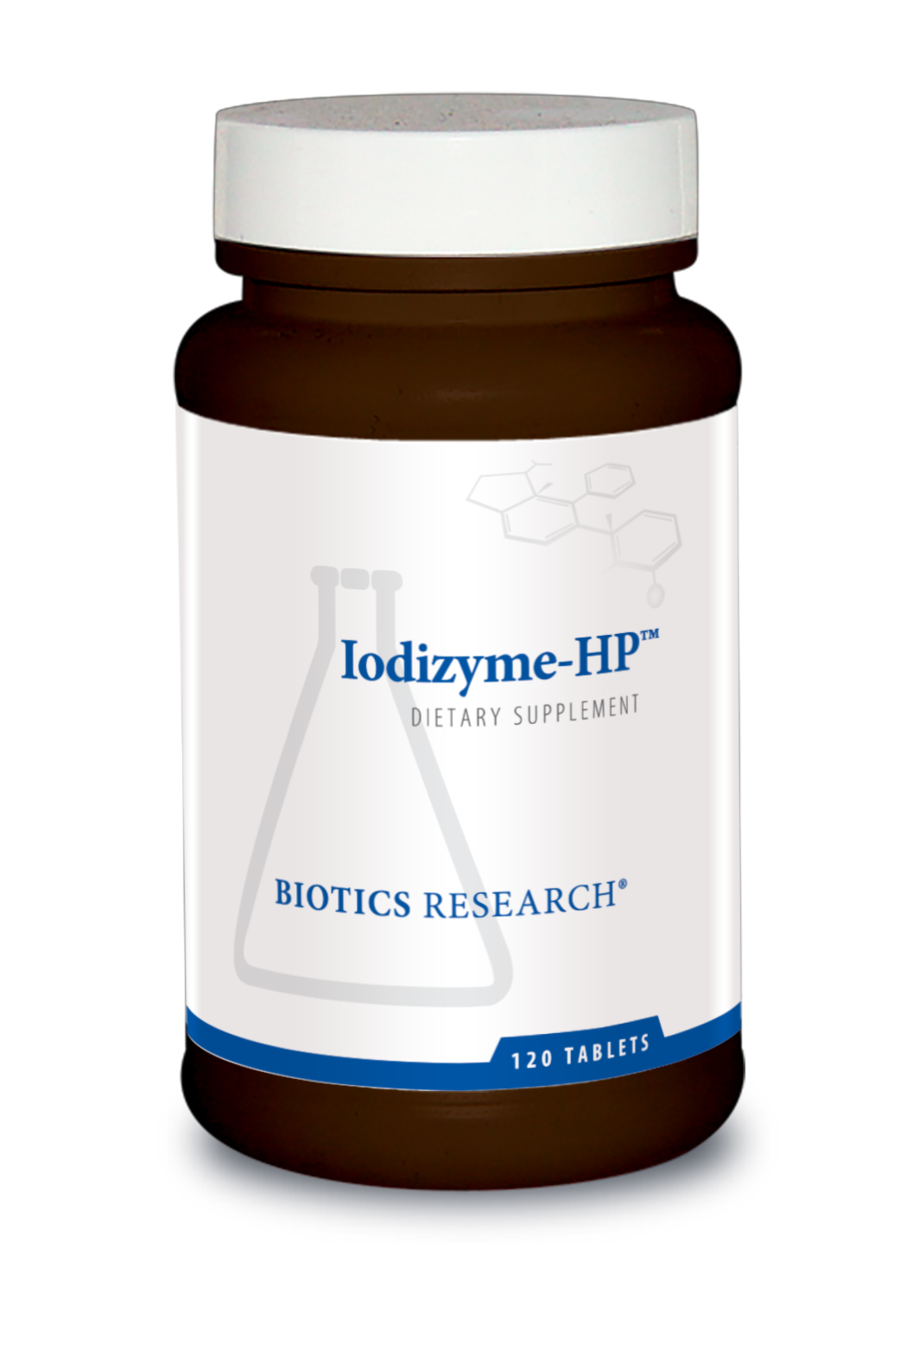 Iodizyme-HP (Iodine/Iodide Supplement) 120 Tabs